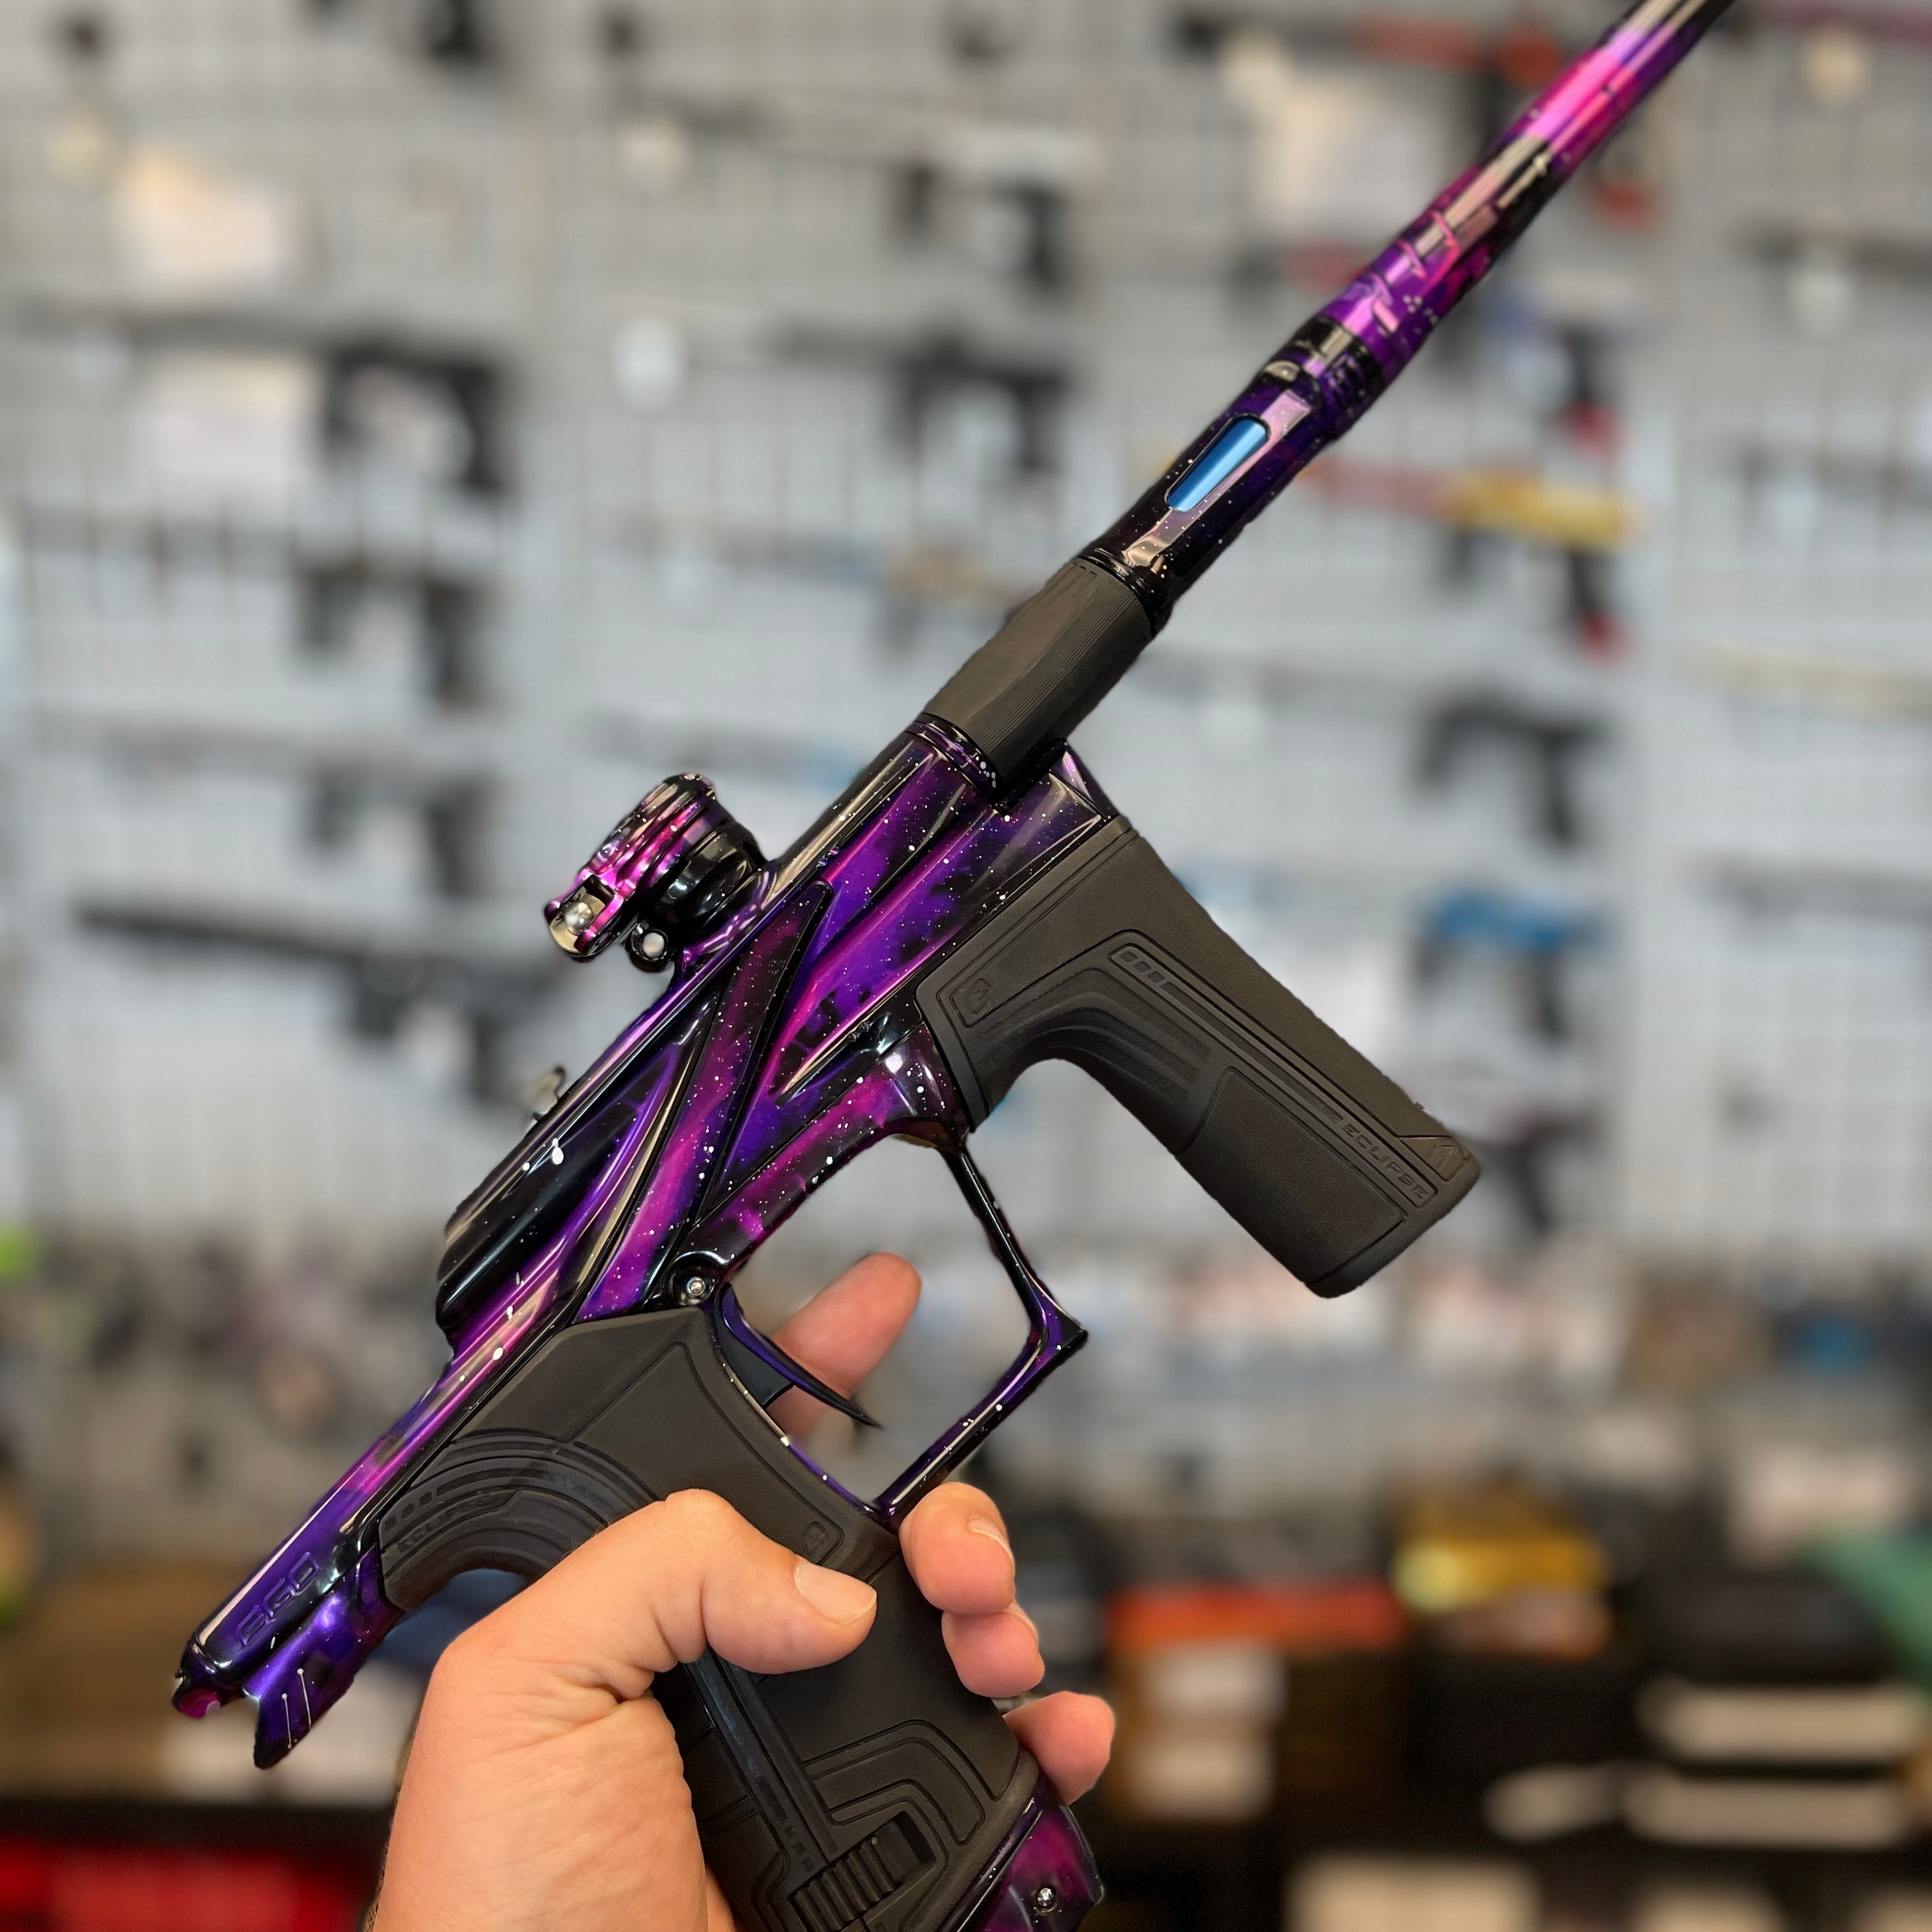 Planet Eclipse Ego LV2 ULTIMATE Paintball Gun - LE Polished Pink/Purple Nebula